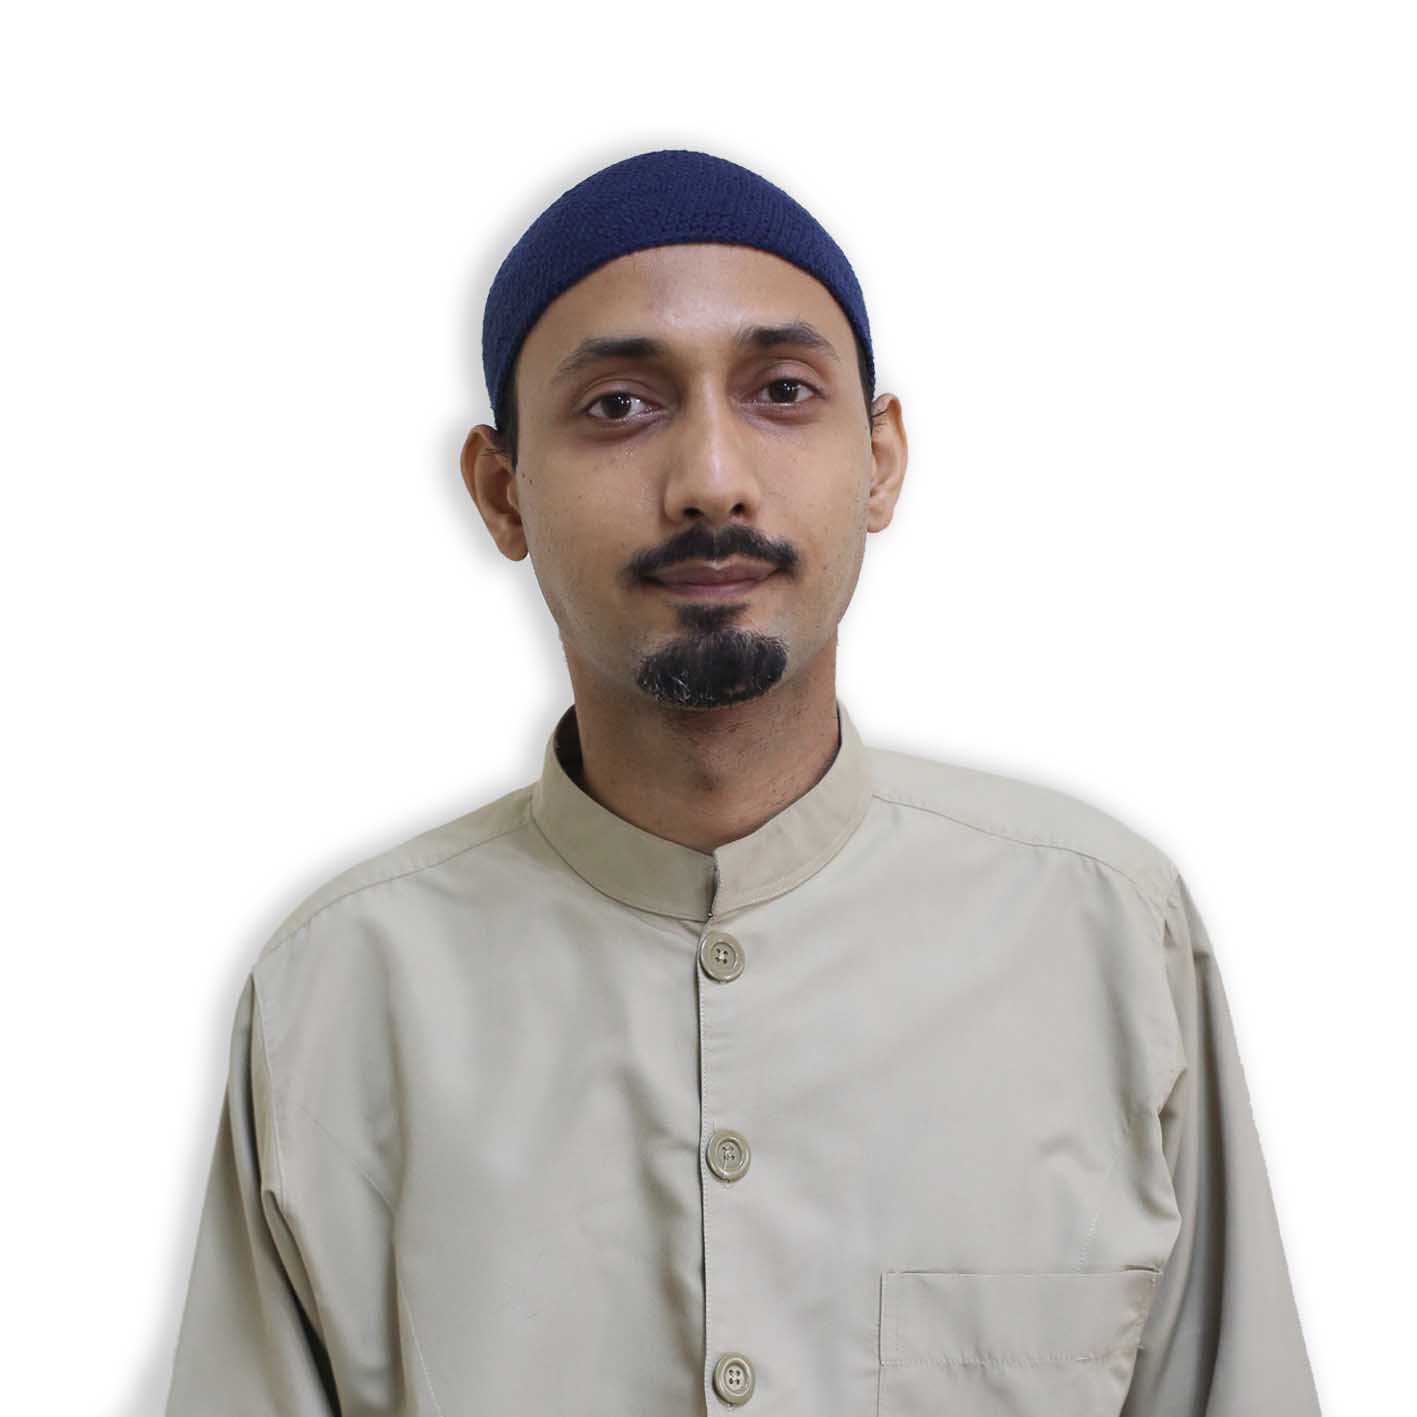 Ustaz Syed Muhammad Bin Syed Omar Al-Kaff